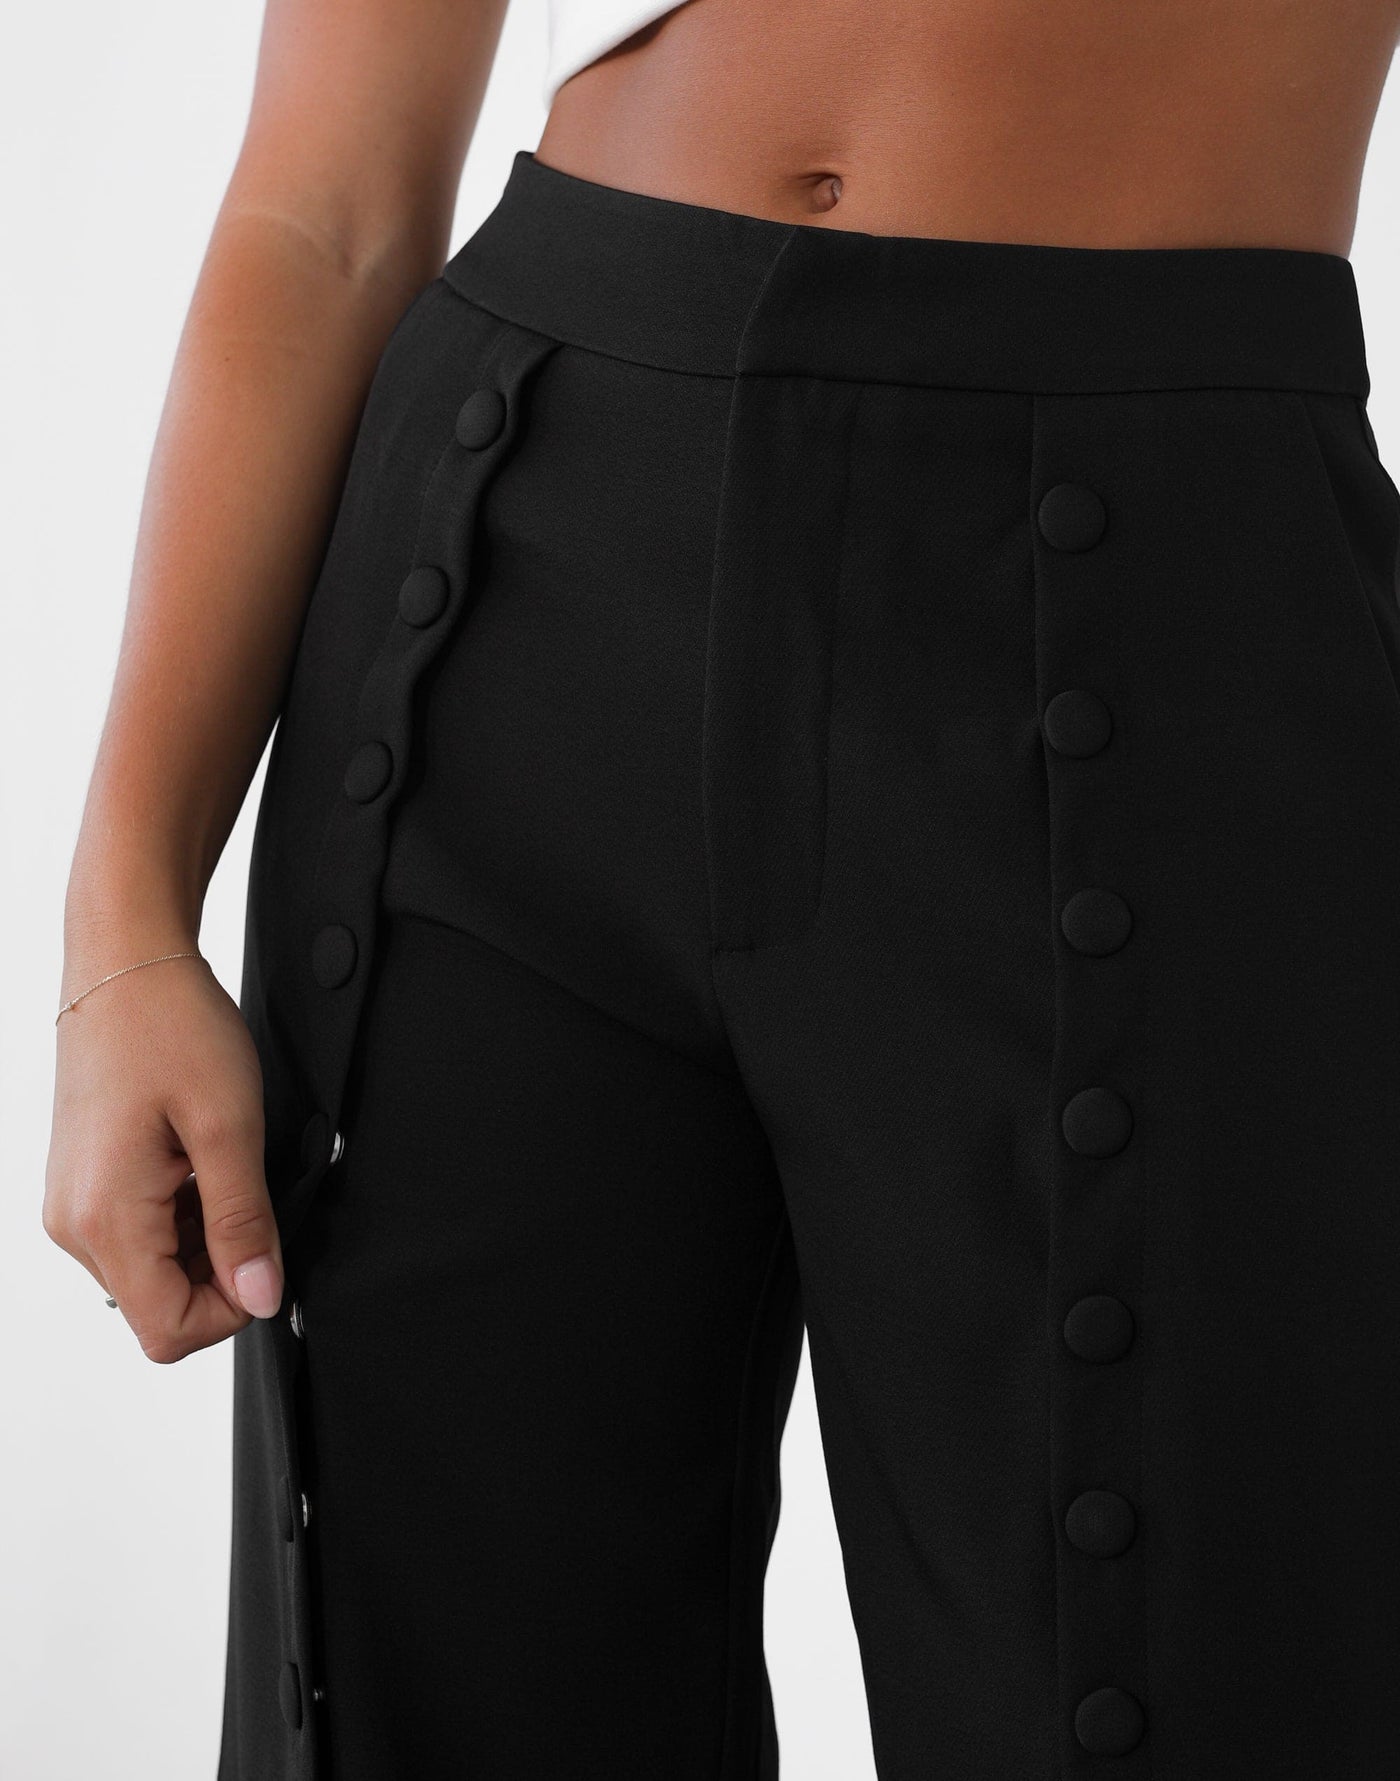 Arlo Pants (Black) - Black Press Stud Wide Leg Pants - Women's Pants - Charcoal Clothing